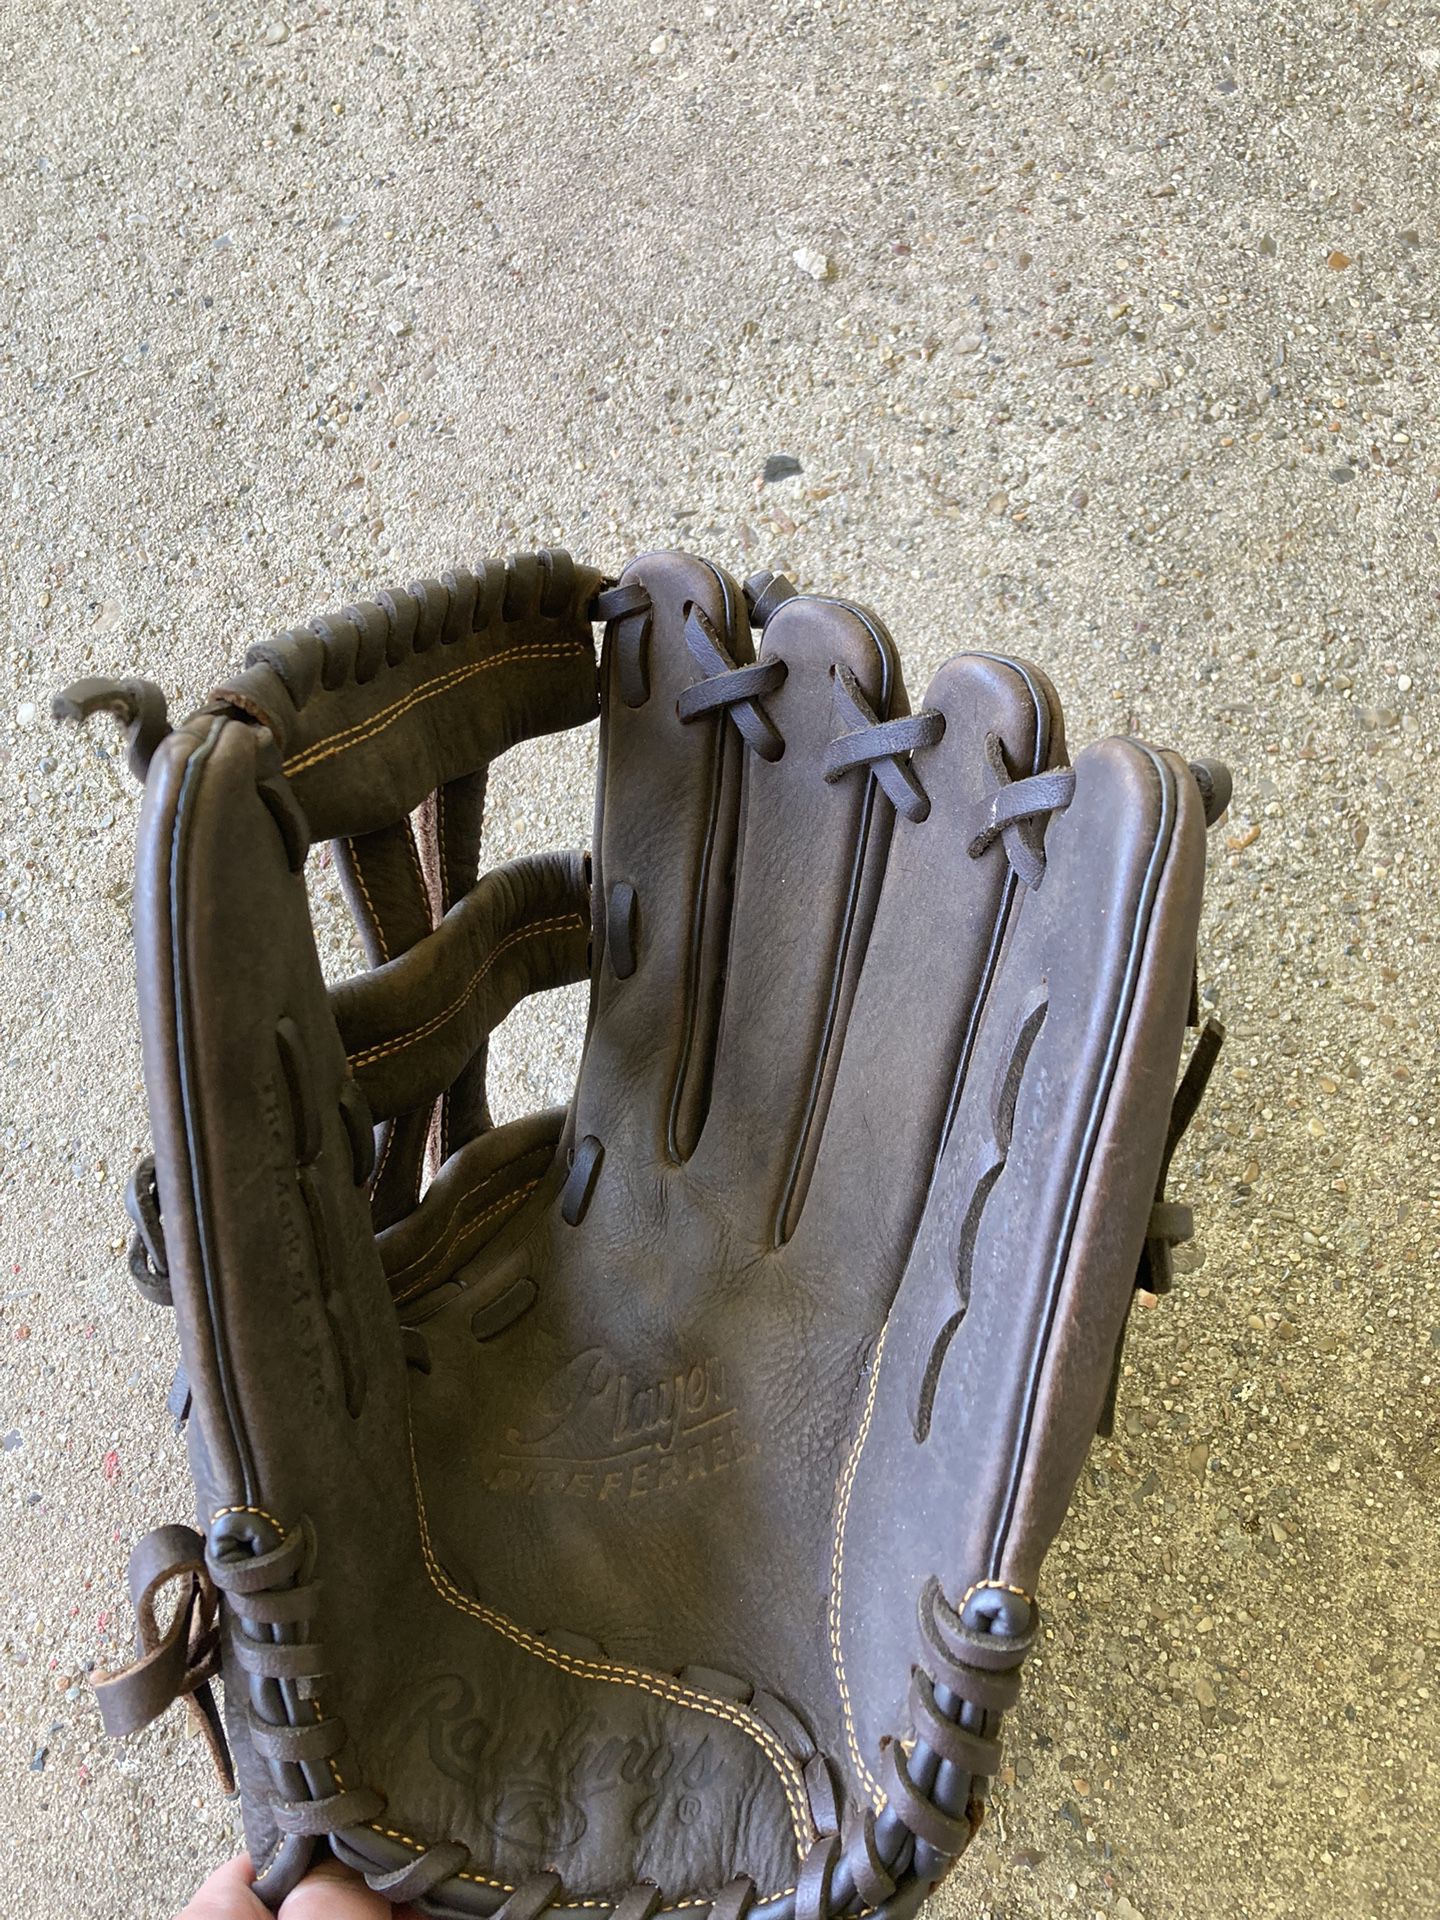 Rawlings Baseball Glove And Ball